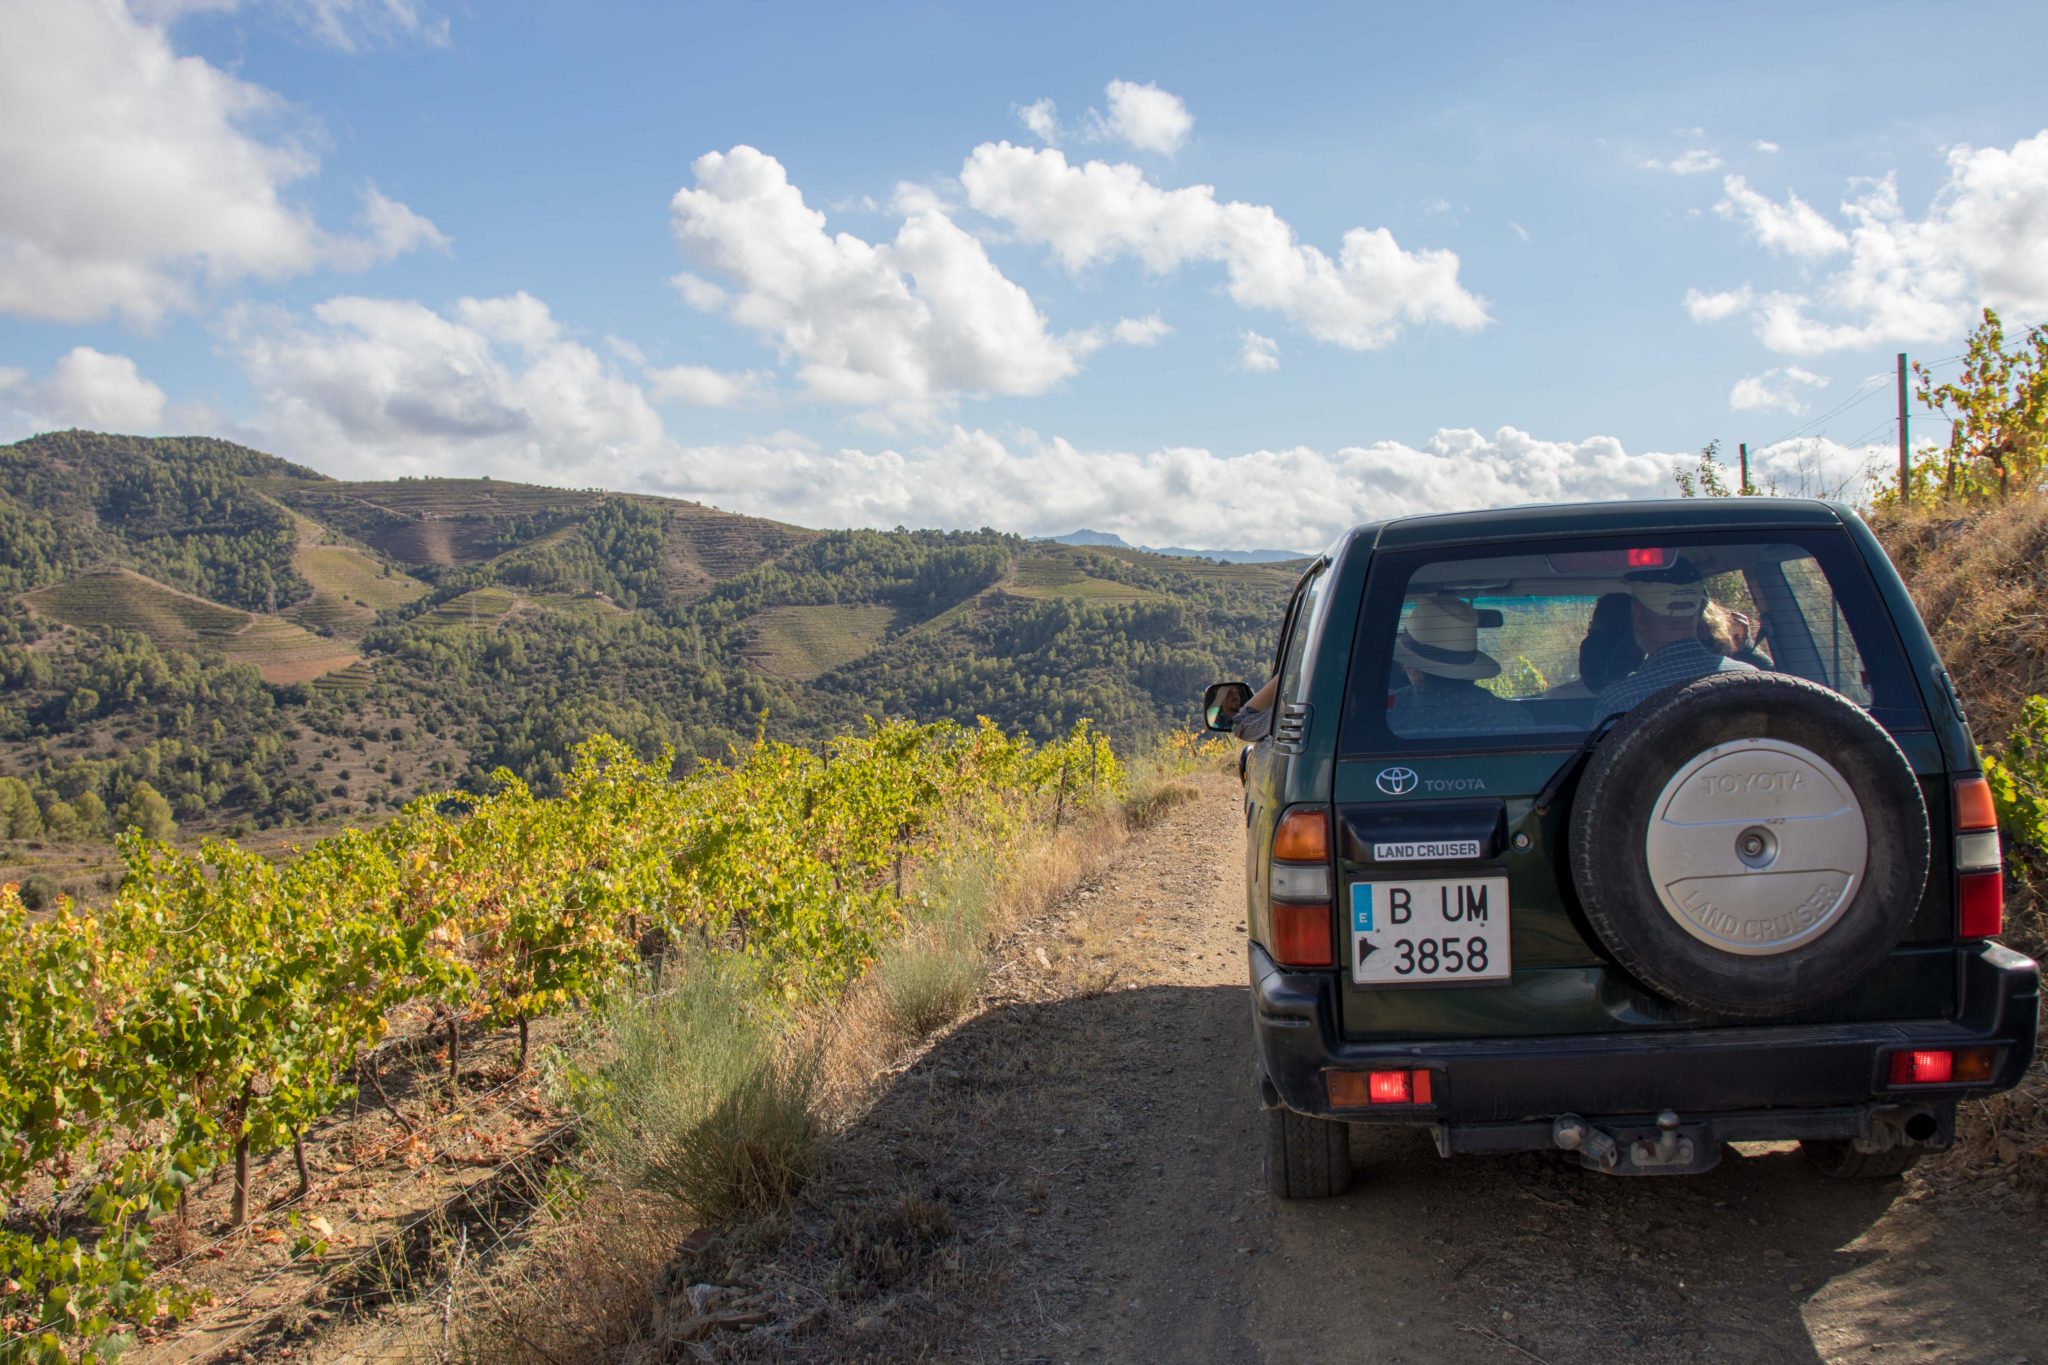 All Terrain Vehicle makes rugged vineyard access easy